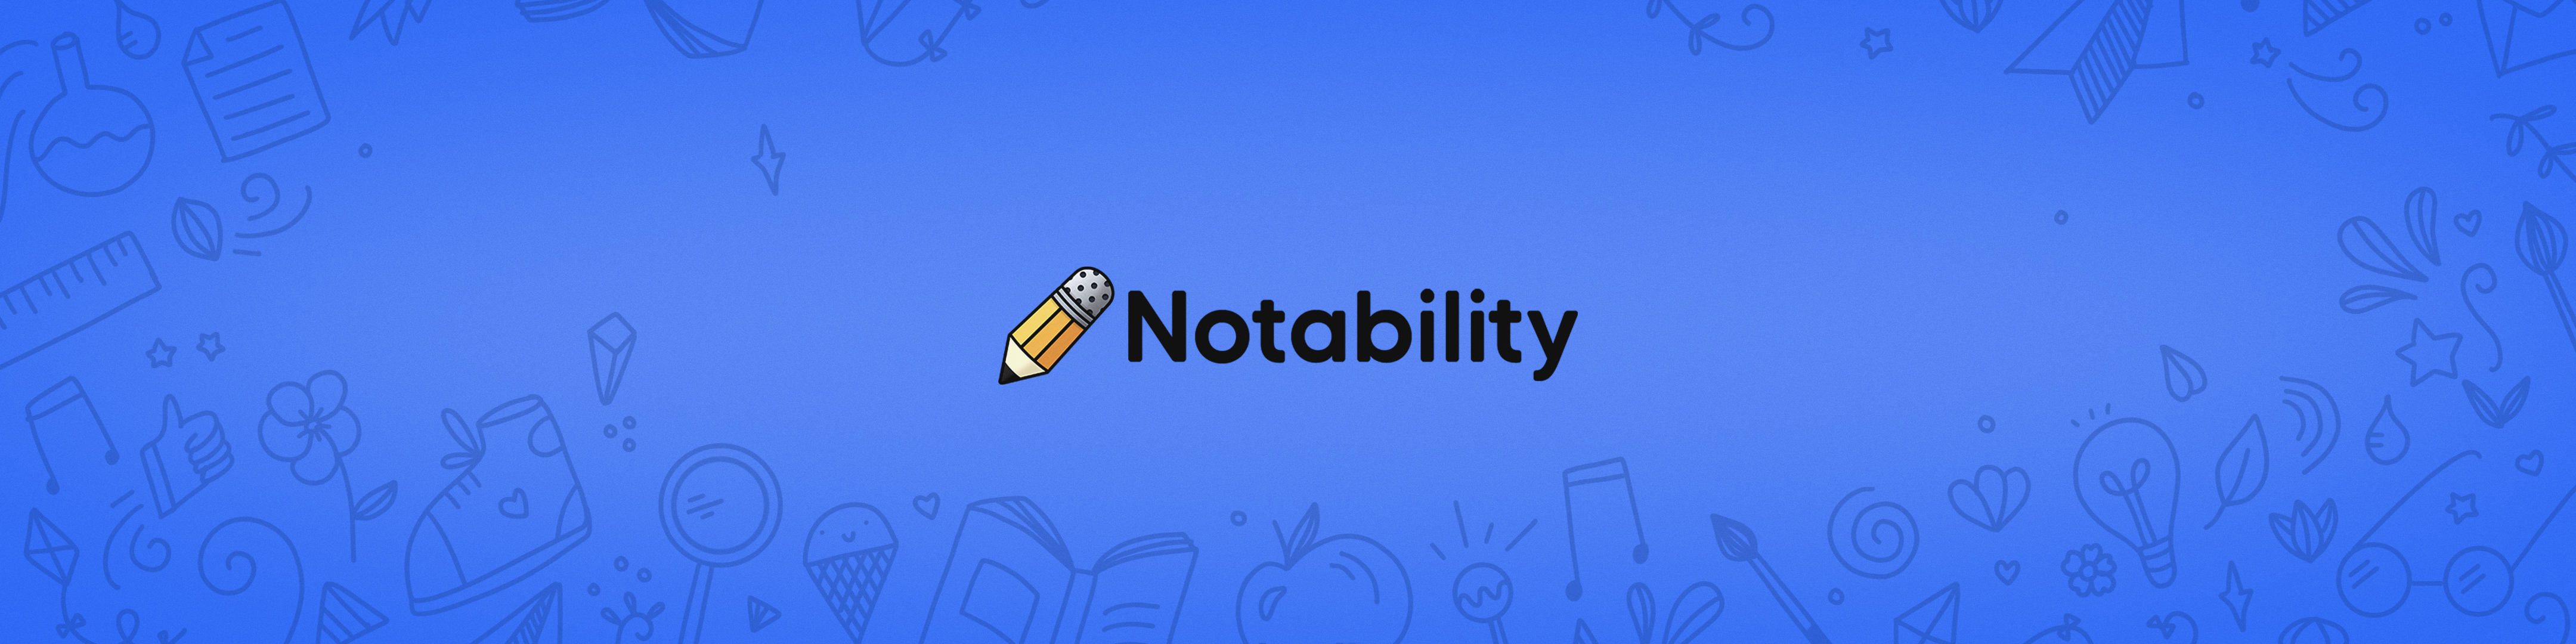 notability organization